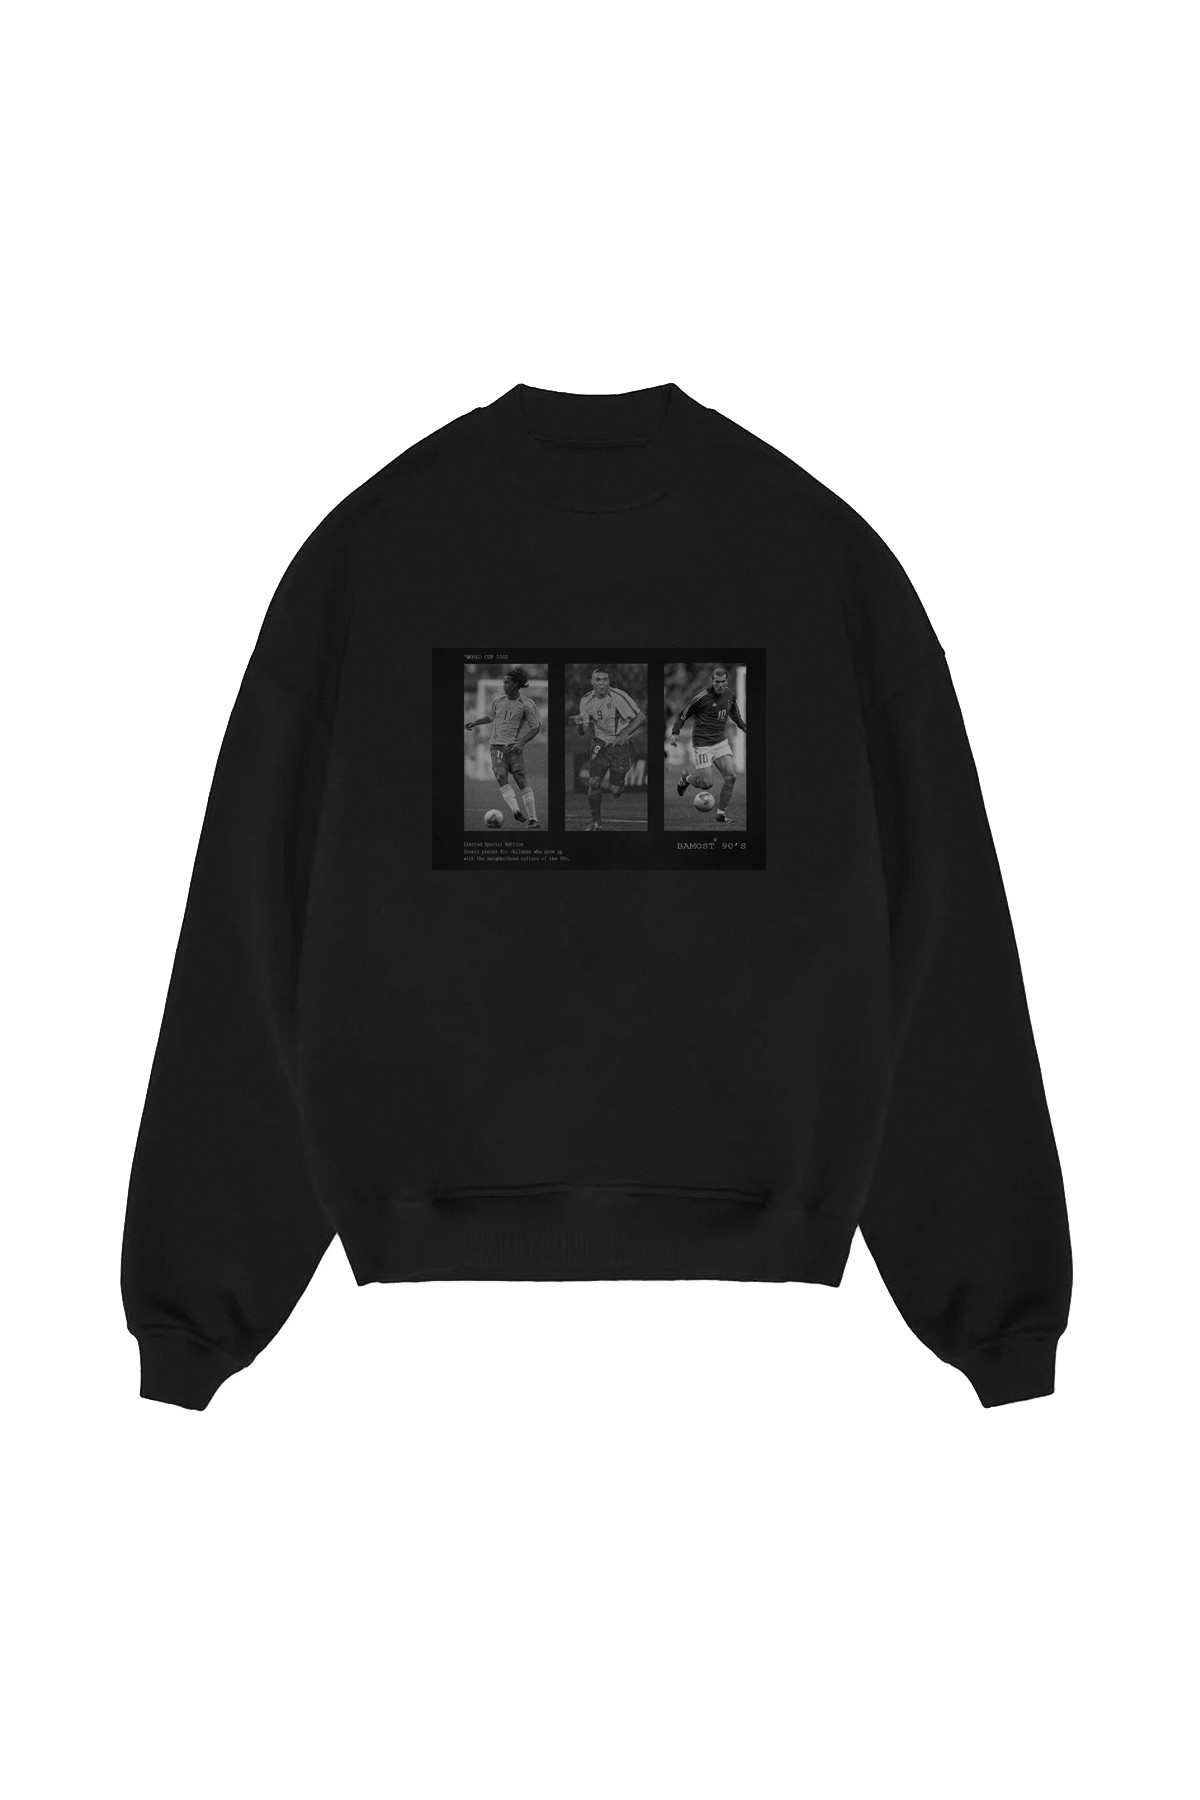 Fwc - 90'S Club Oversize Sweatshirt - BLACK